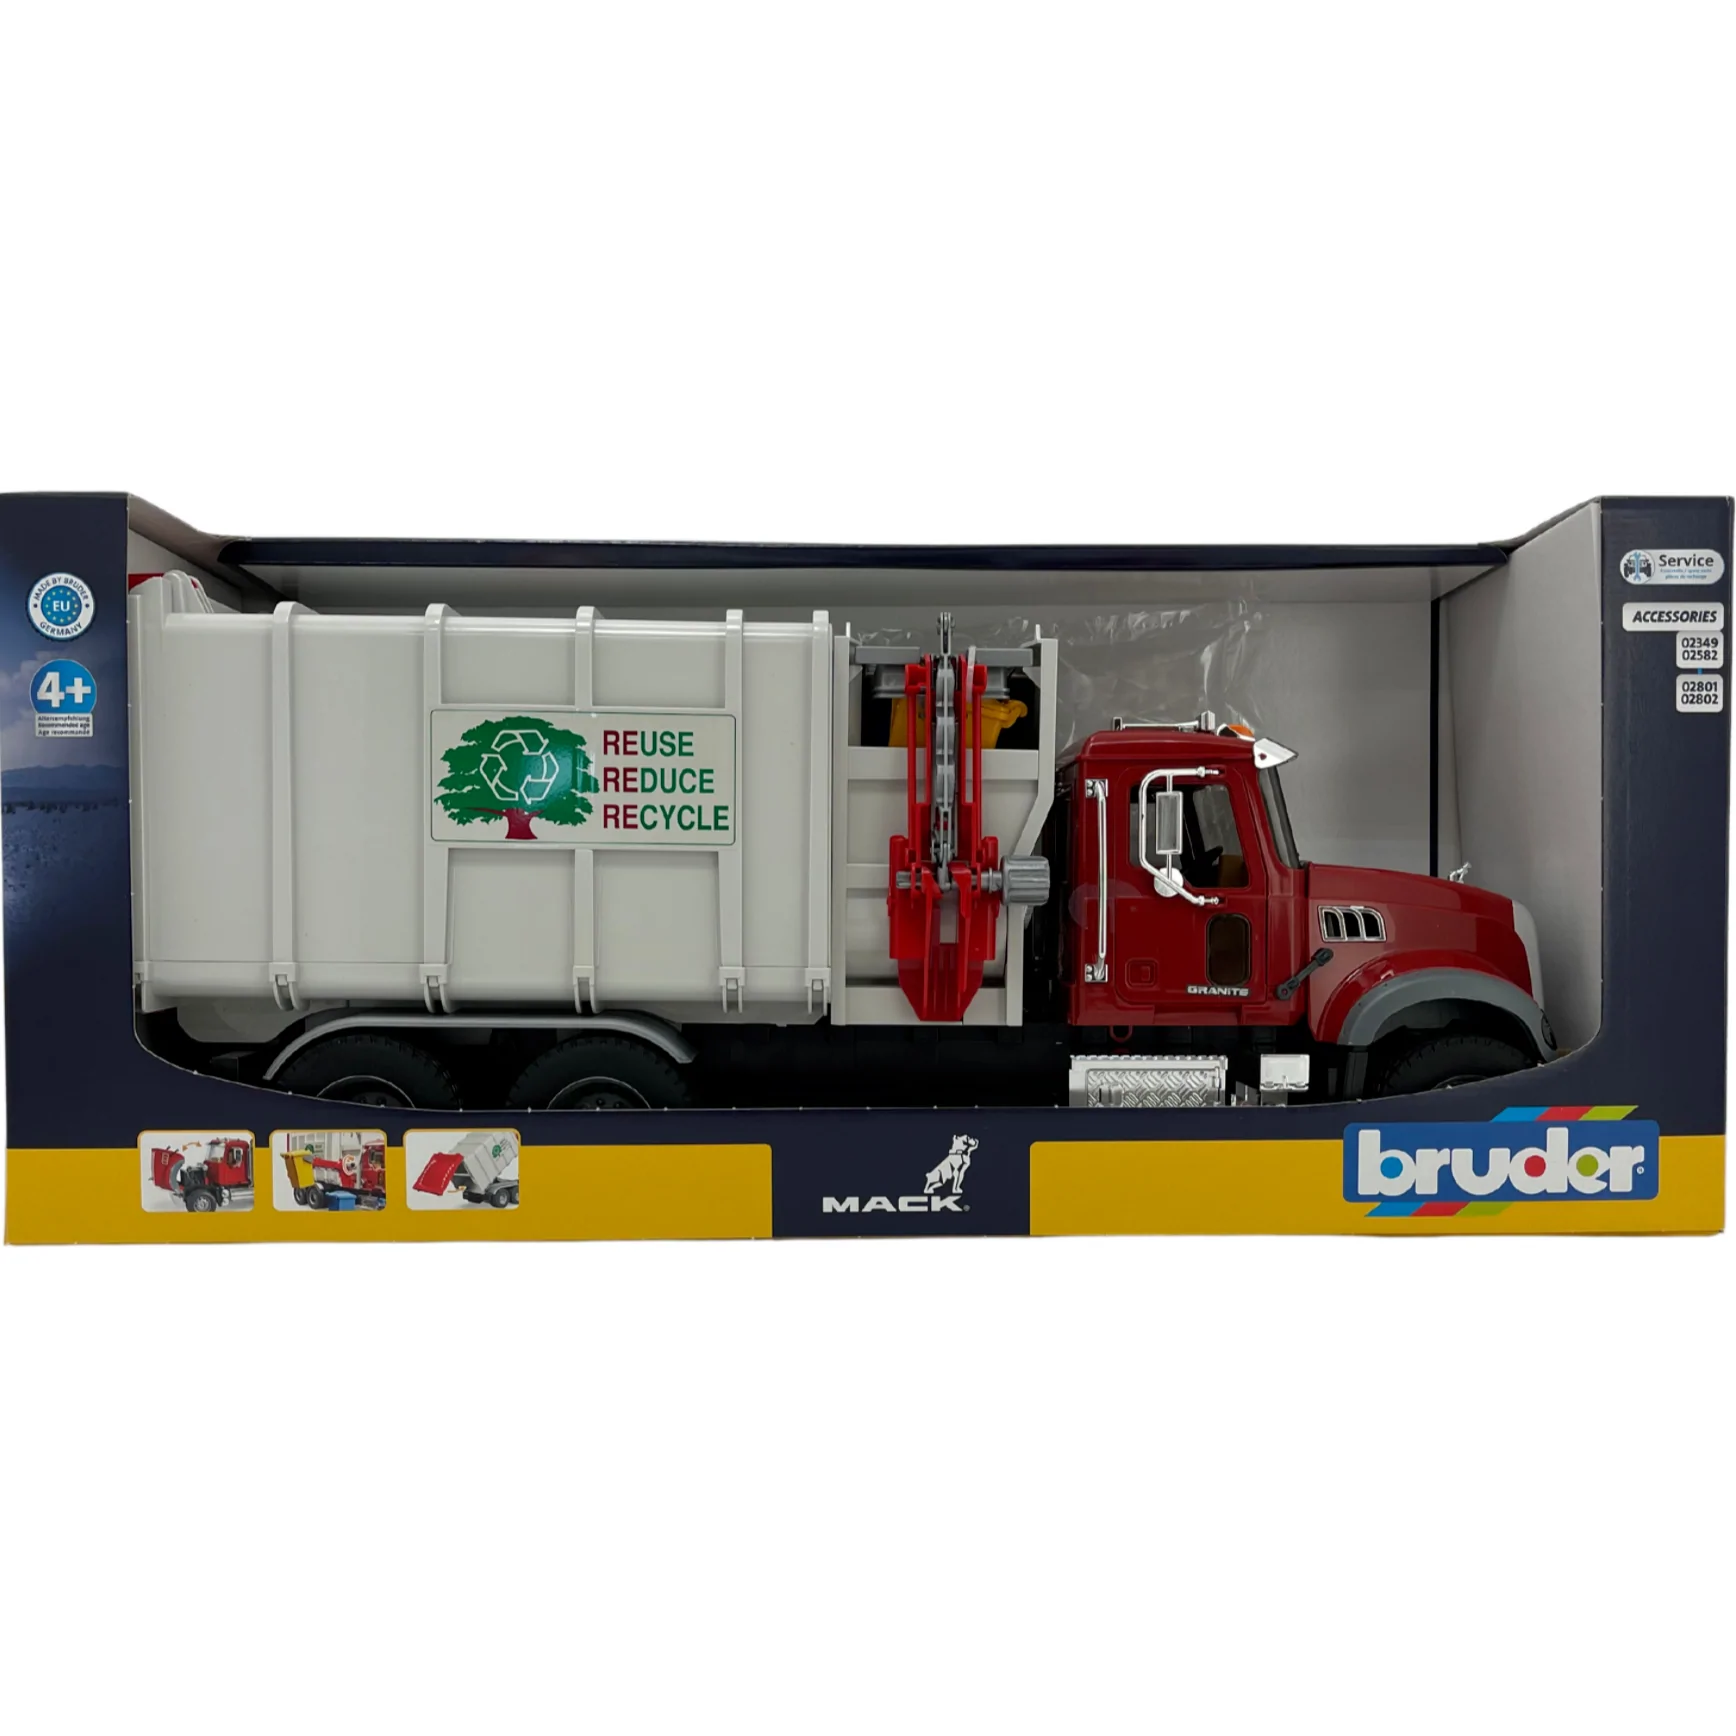 Bruder MACK Garbage Truck Toy / MACK Granite Garbage Truck & Loader / Environmental Service Toy / Red and Grey